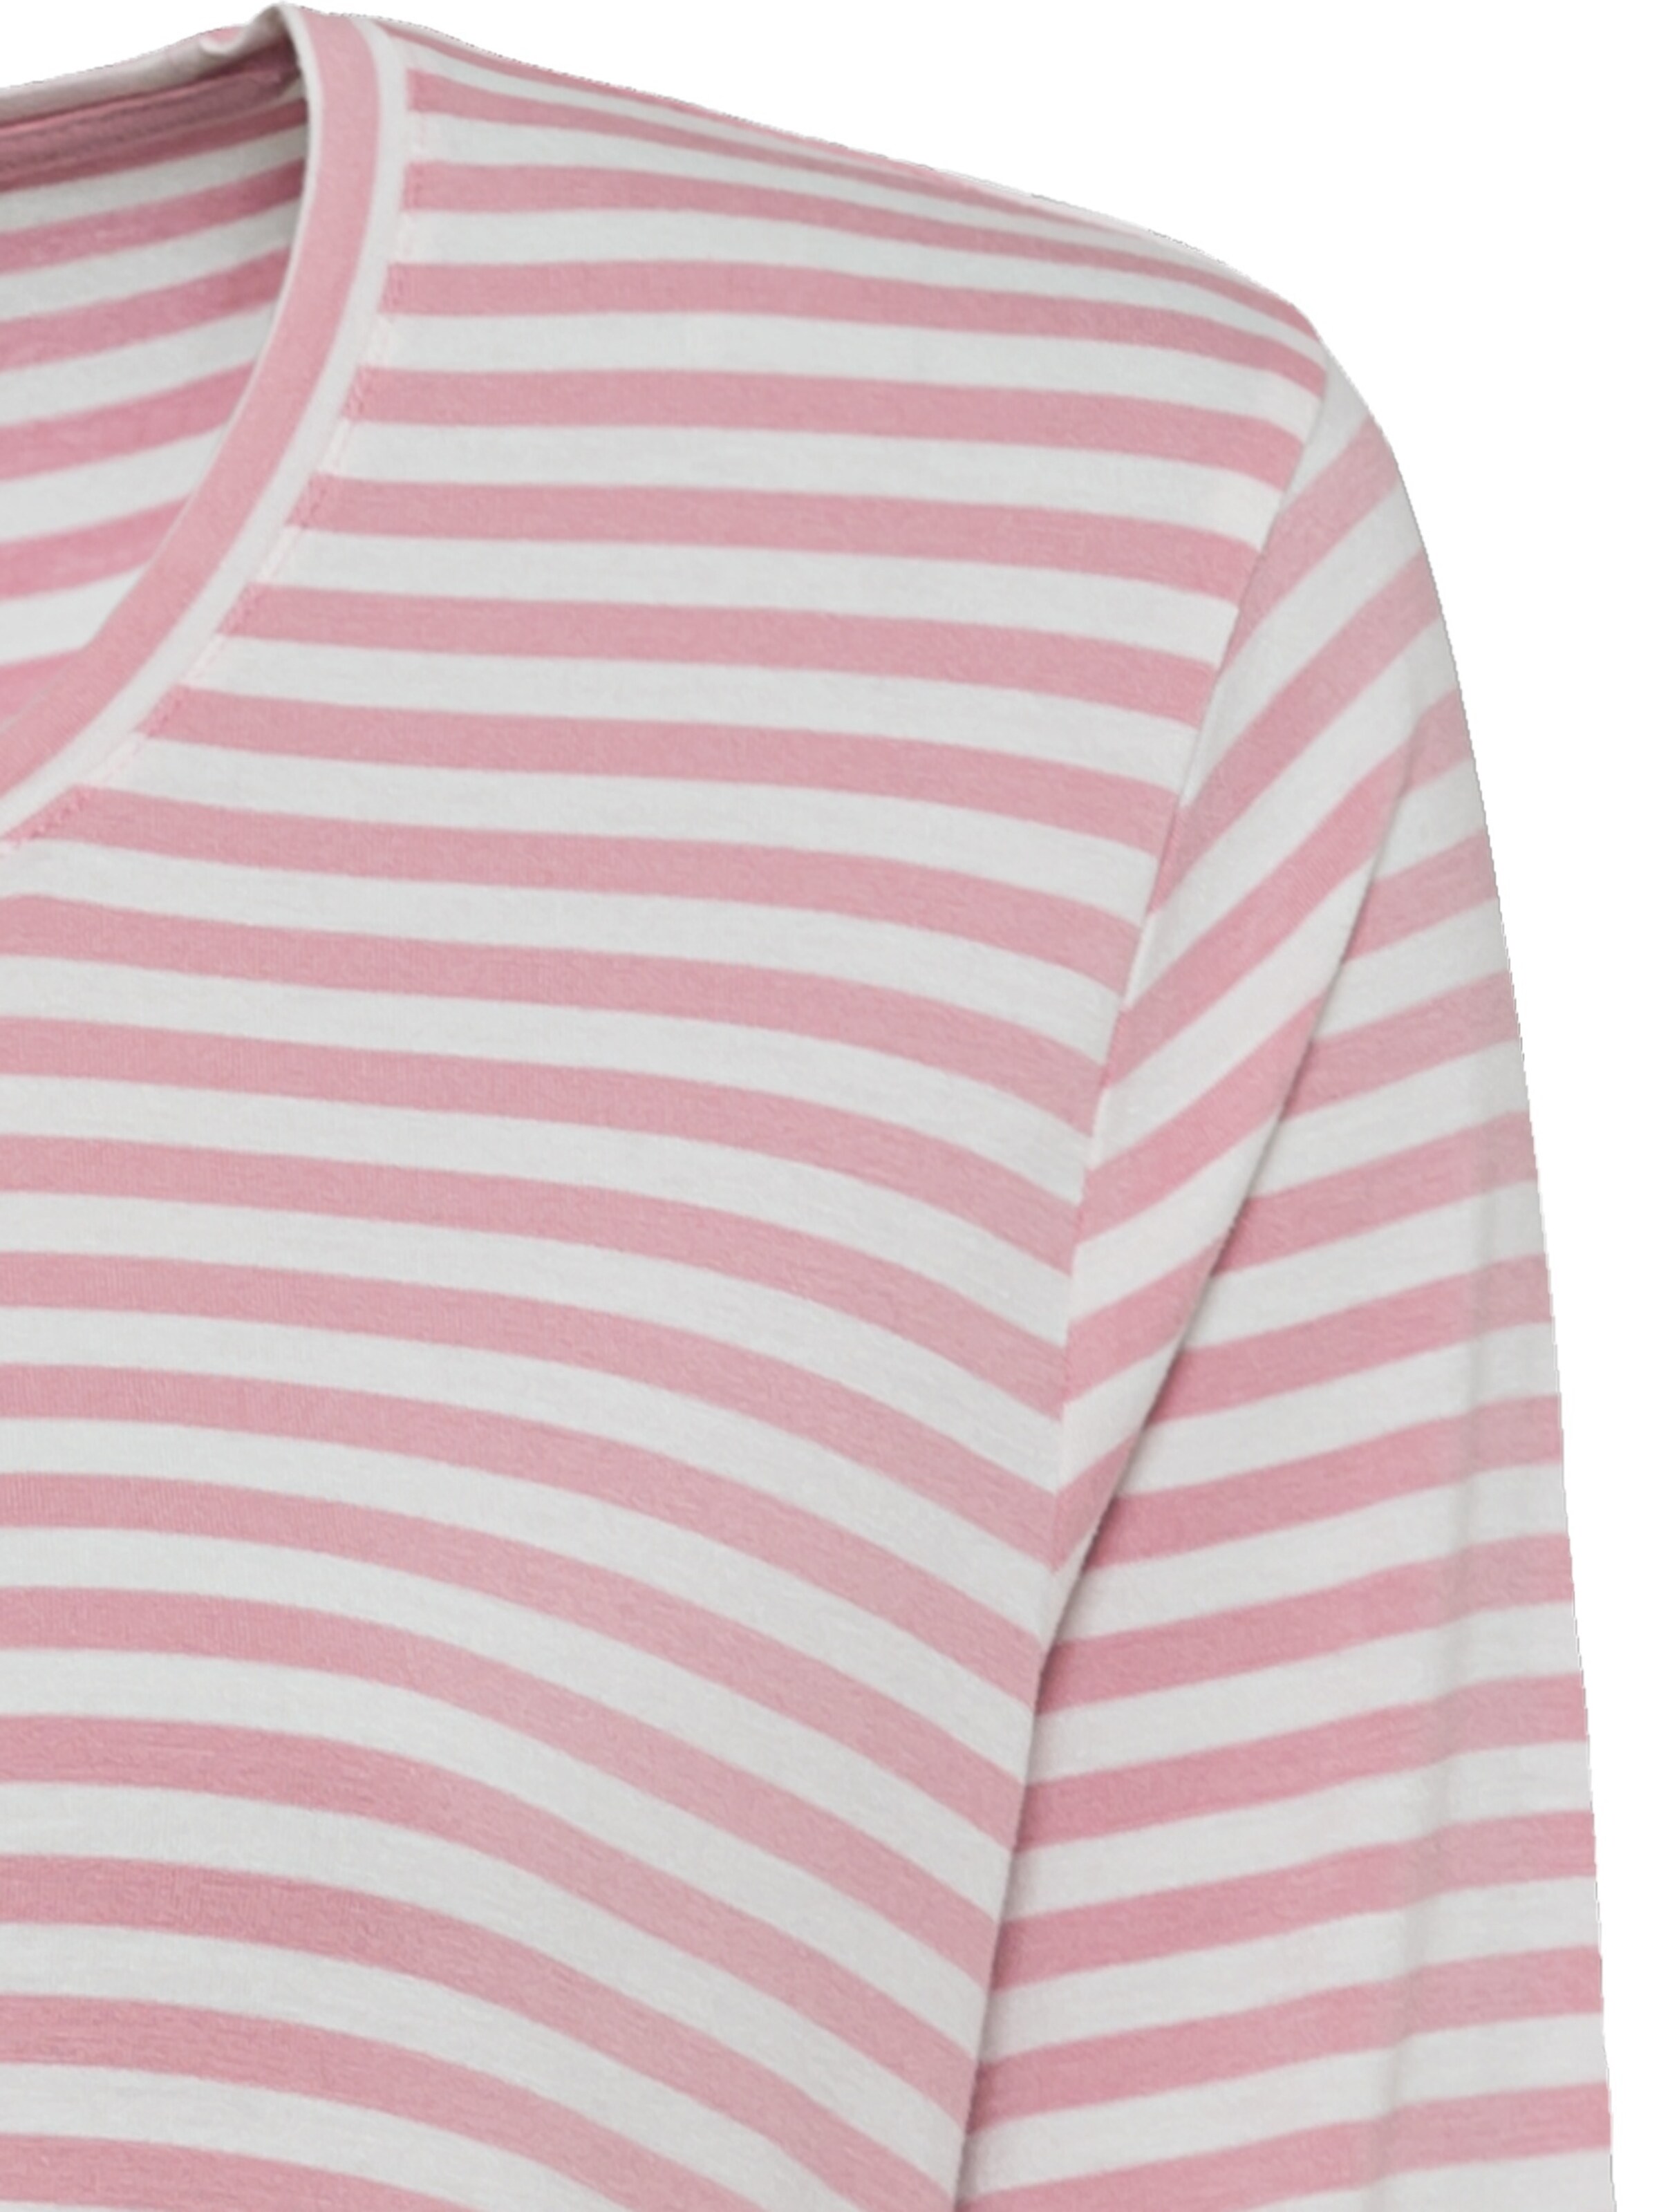 Frauen Shirts & Tops Olsen Shirt in Rosa, Weiß - LE61162